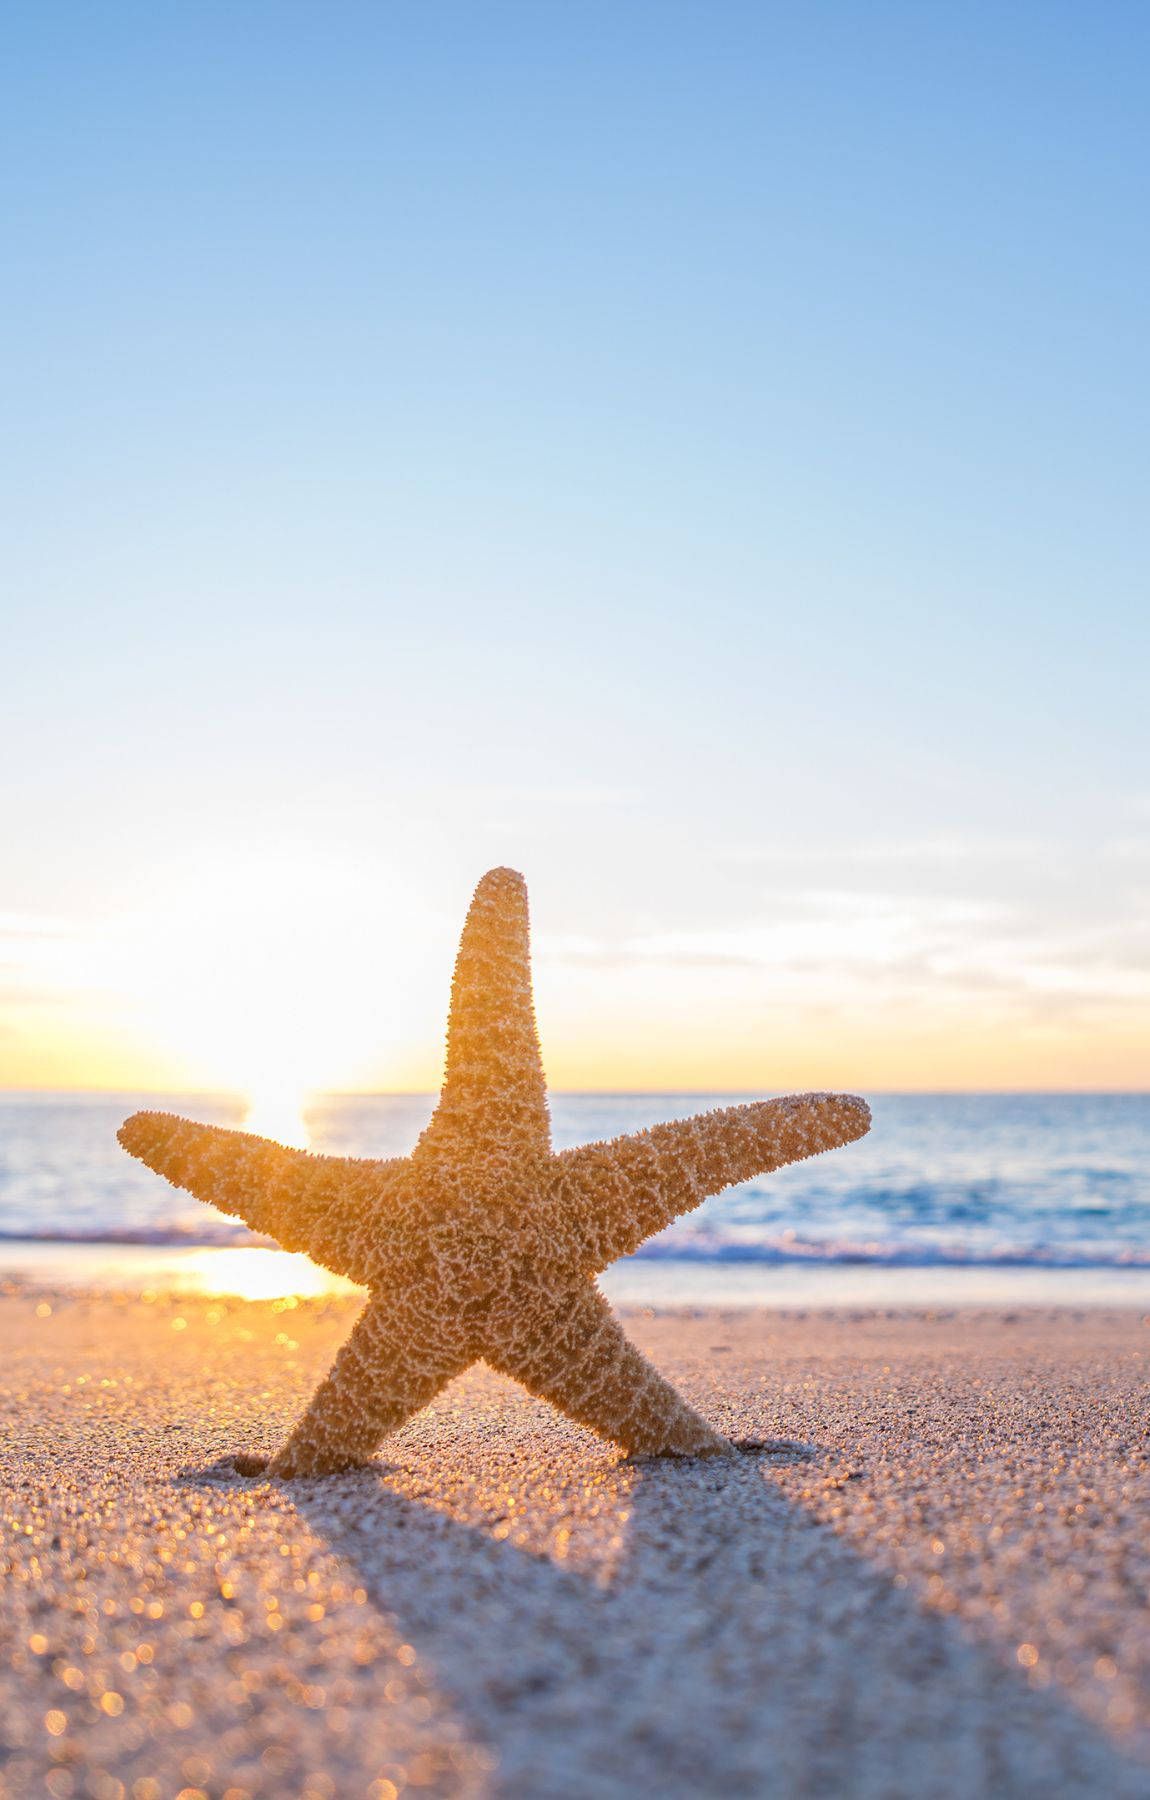 A starfish on the beach at sunset - Starfish